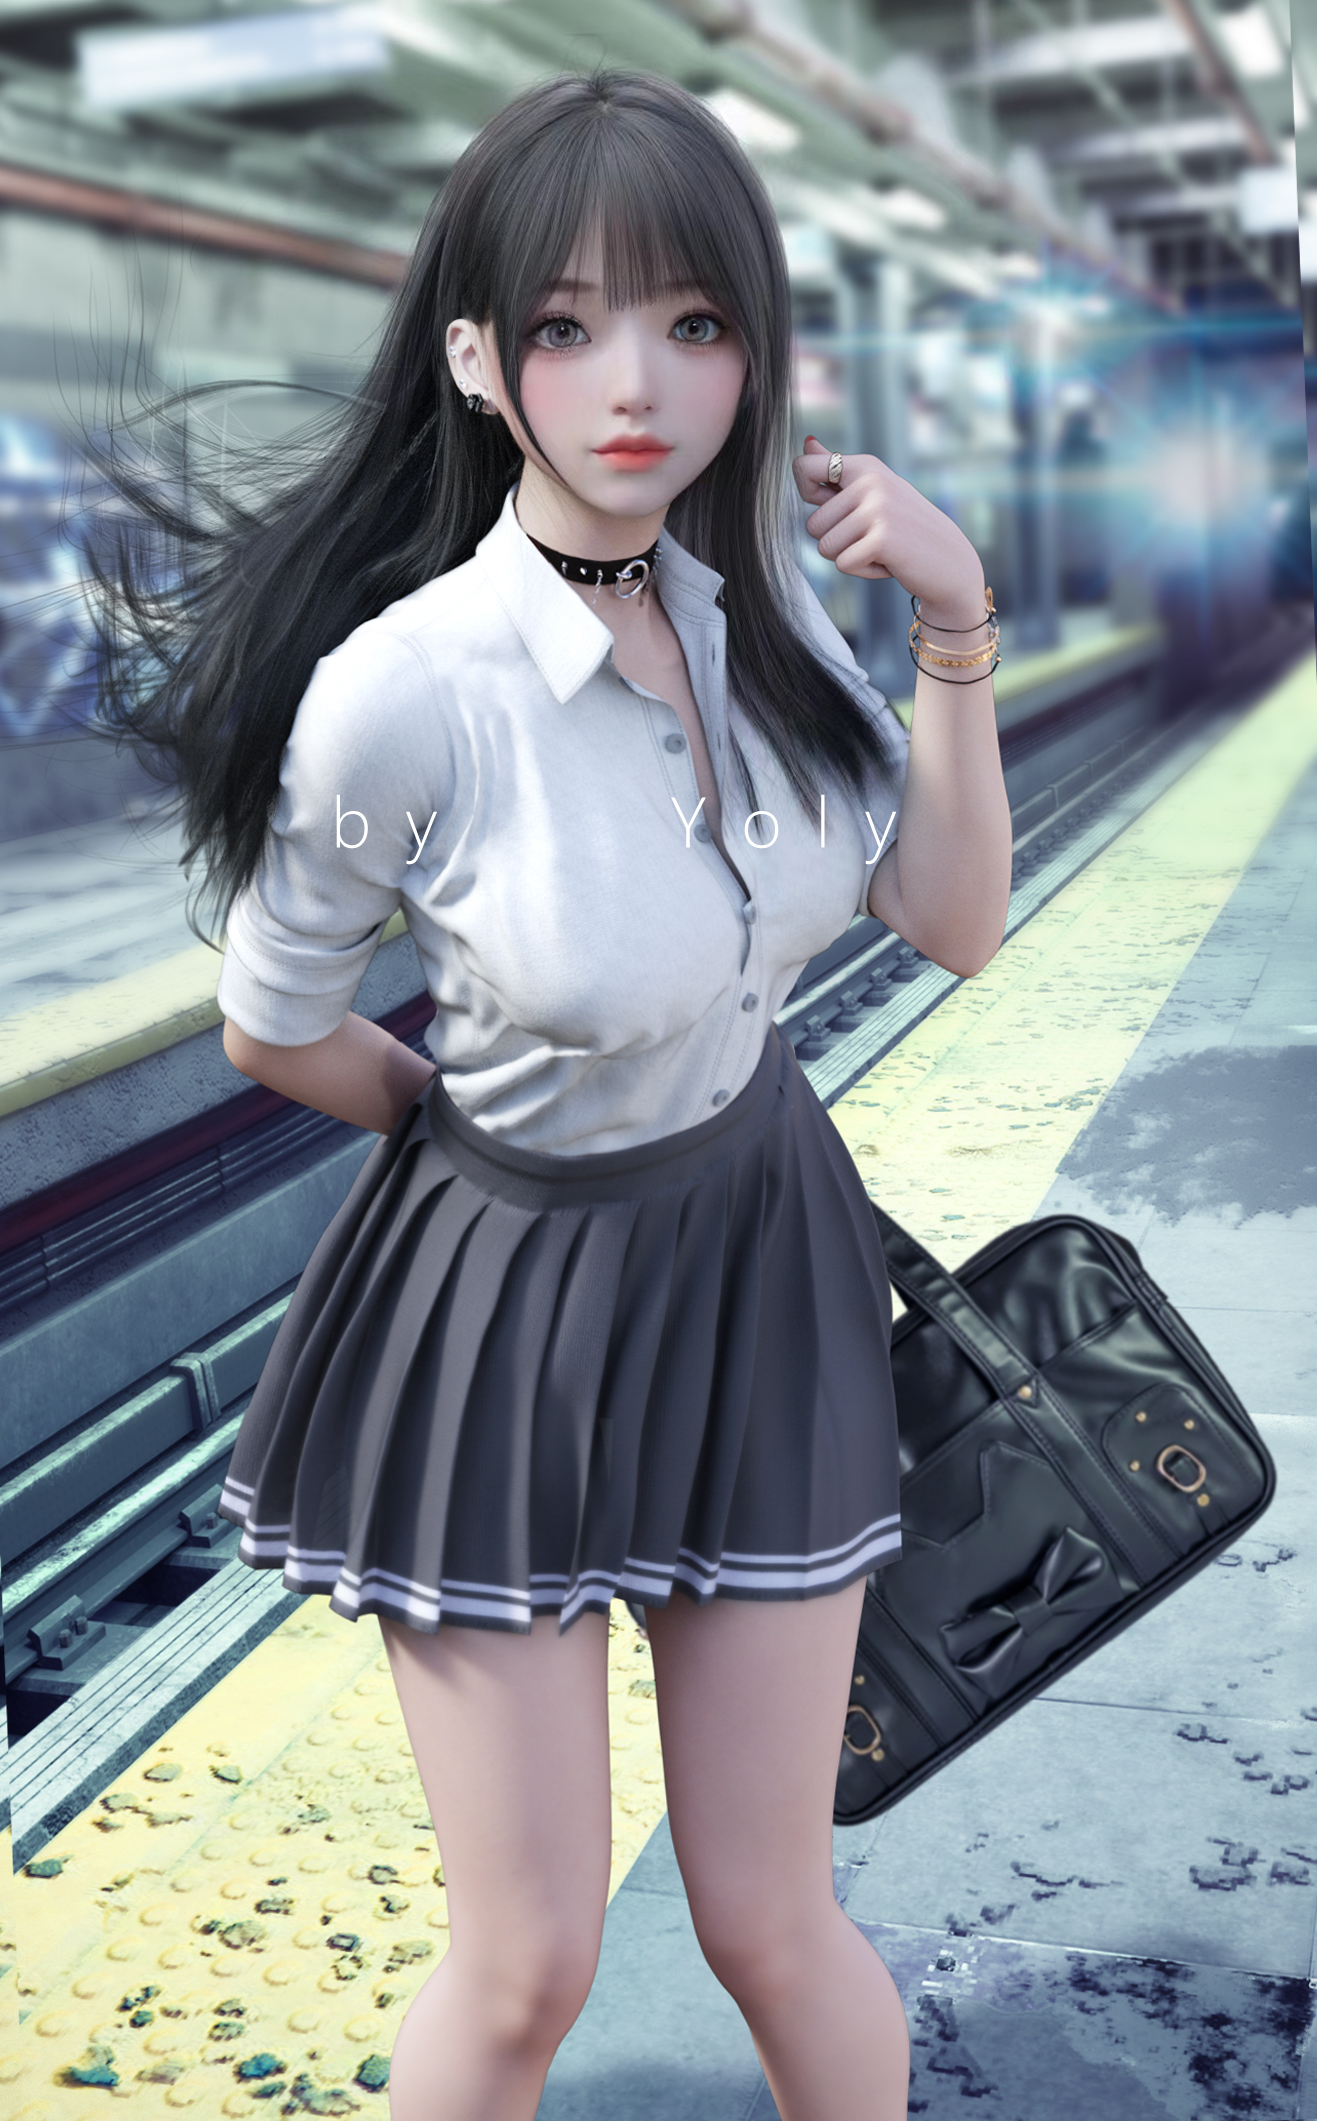 General 1317x2121 CGI digital art school uniform schoolgirl Yoly long hair women